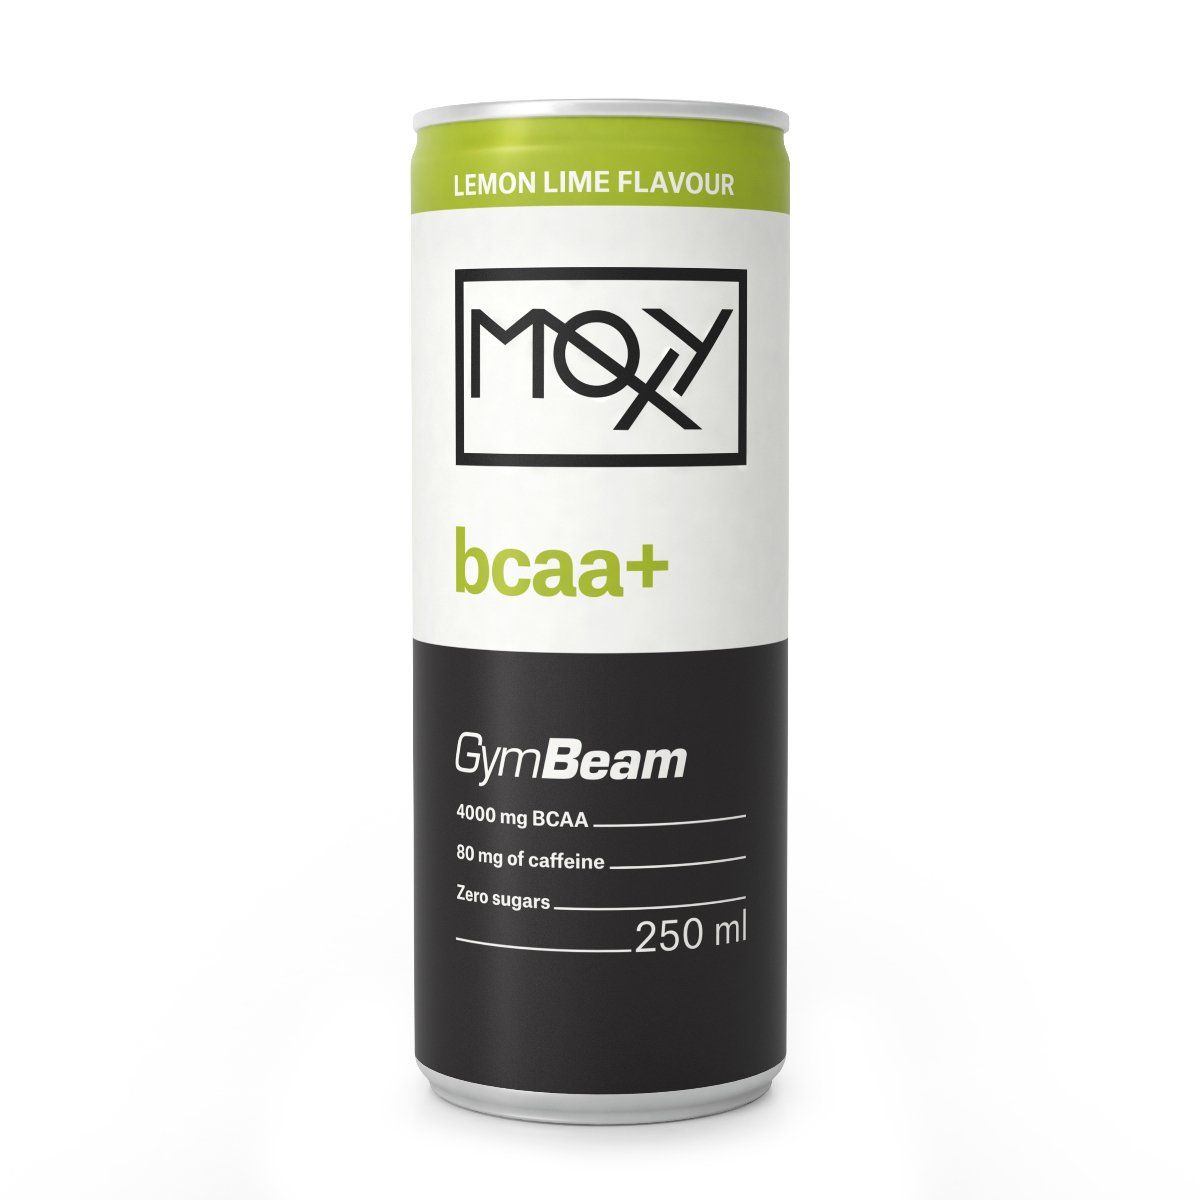 GYMBEAM - MOXY BCAA+ ENERGY DRINK - 24X250 ML